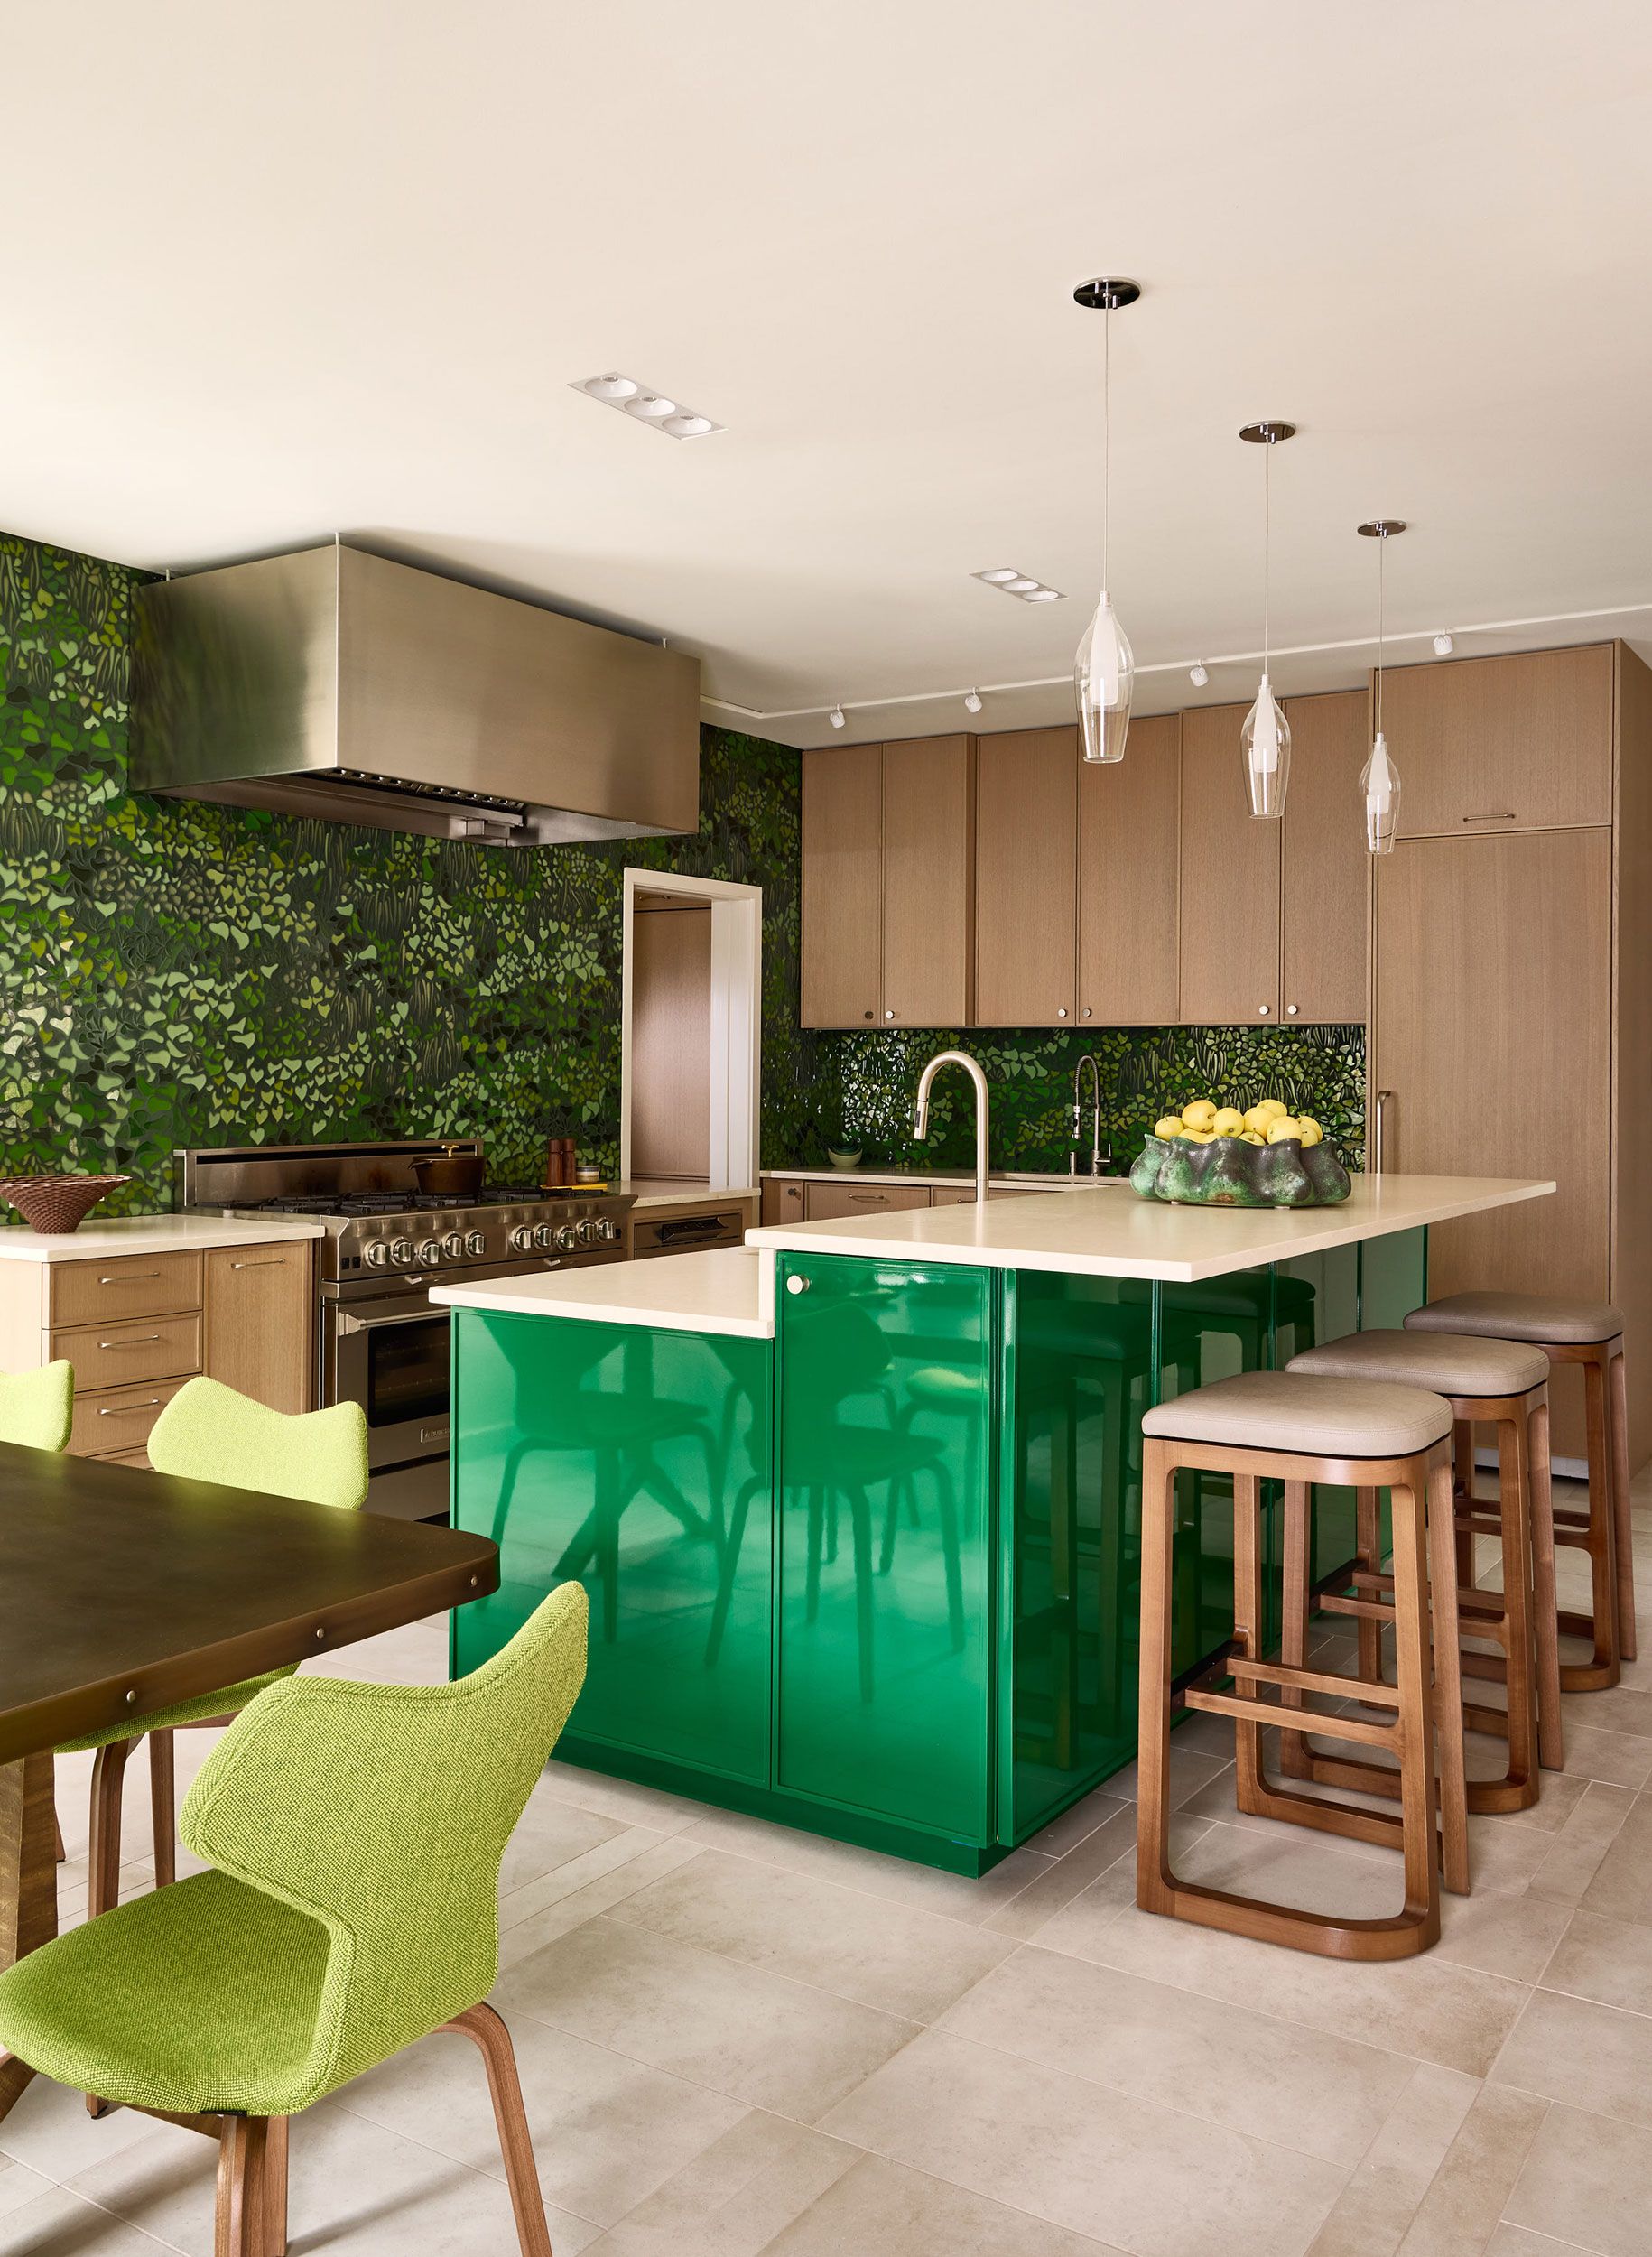 Inspiring Green Kitchen Ideas for 2022: Sage Green, Olive, Emerald